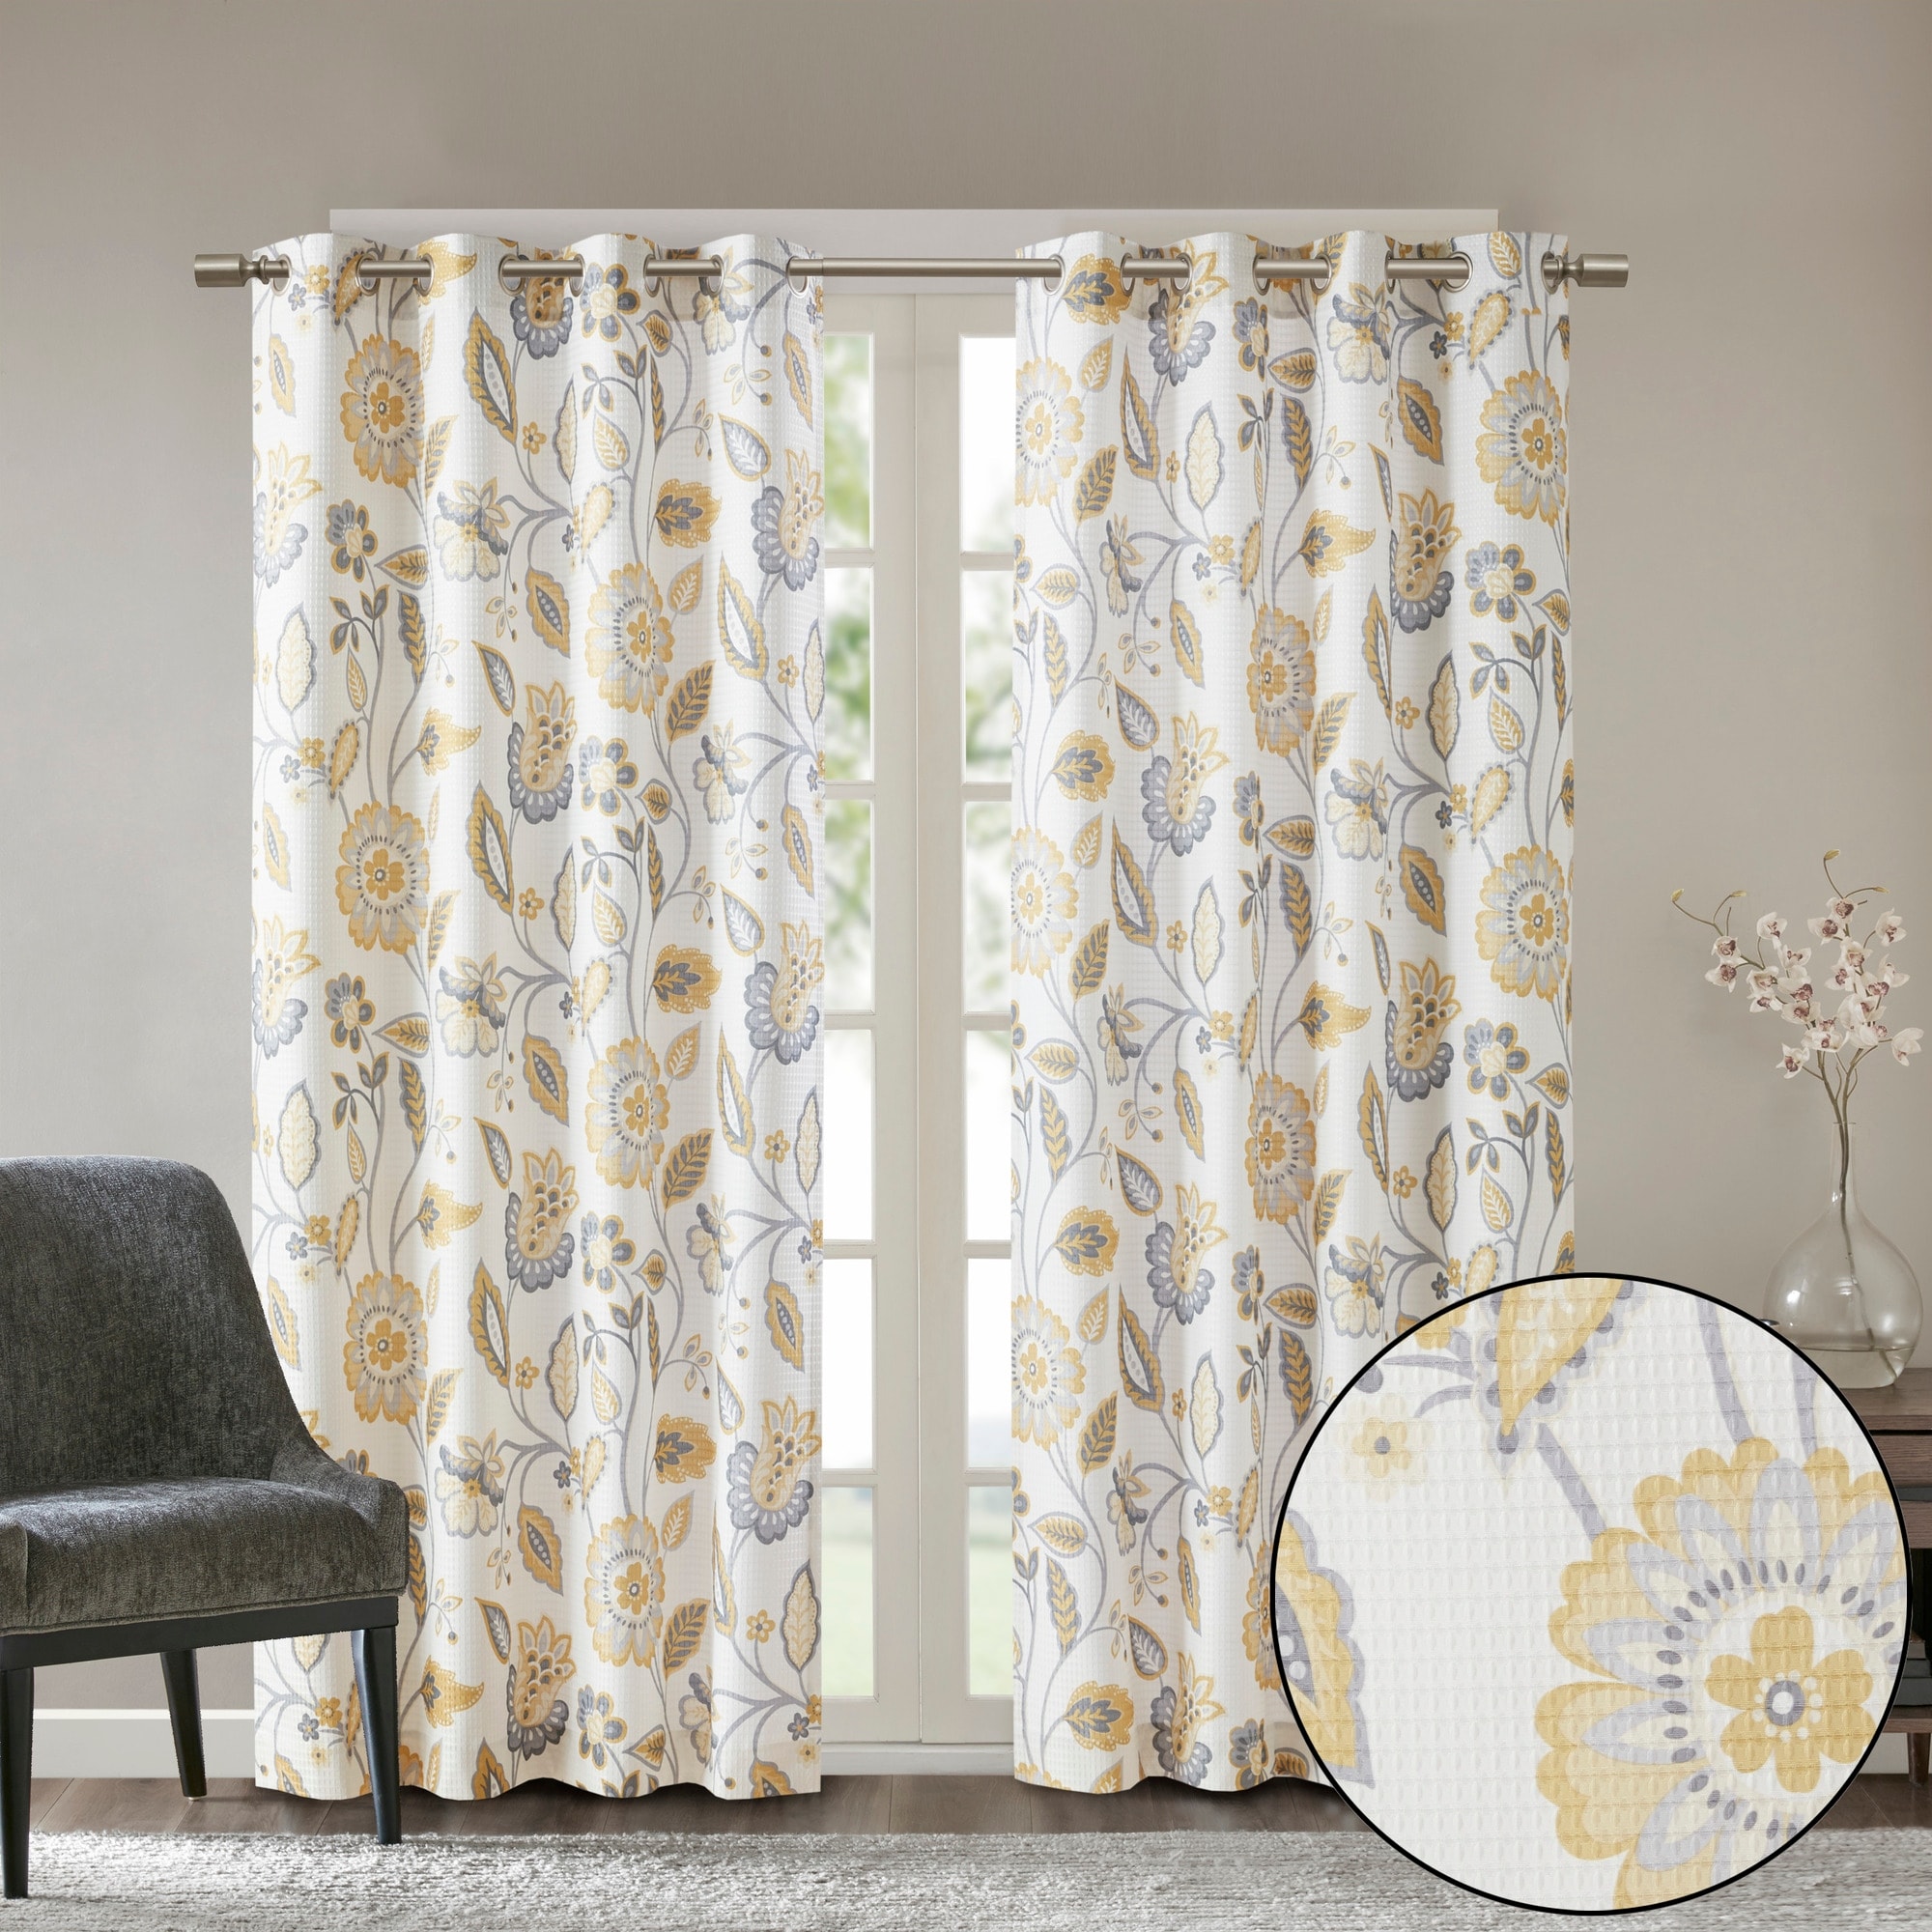 Set of 2 Gold Jacquard Grommet Window Curtain Panels Floral Medallion Design 